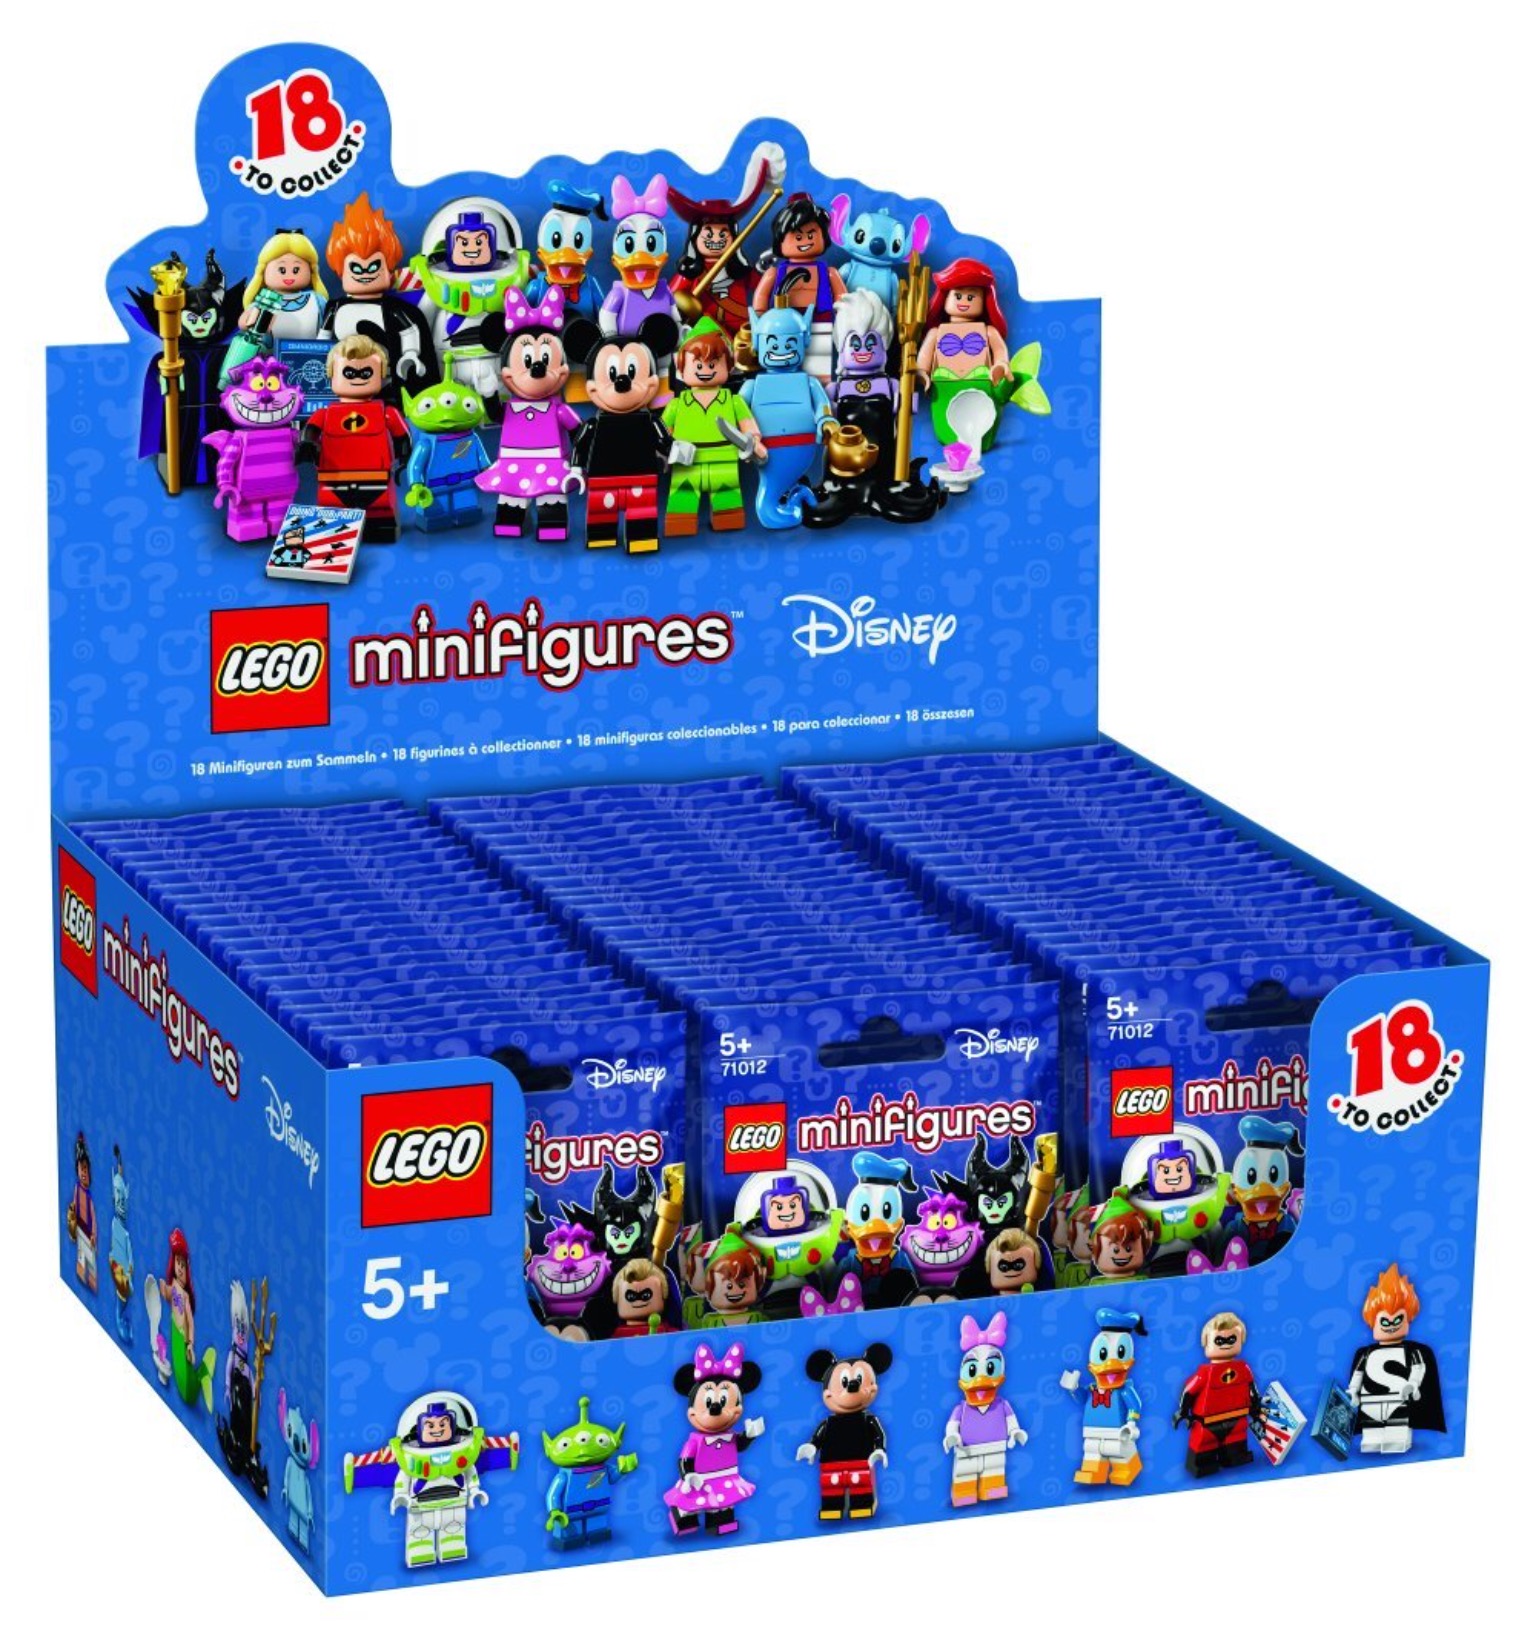 LEGO 71012 DISNEY MINIFIGURES Mini Figure CHOOSE OR PICK A FIGURE FROM THE LIST 